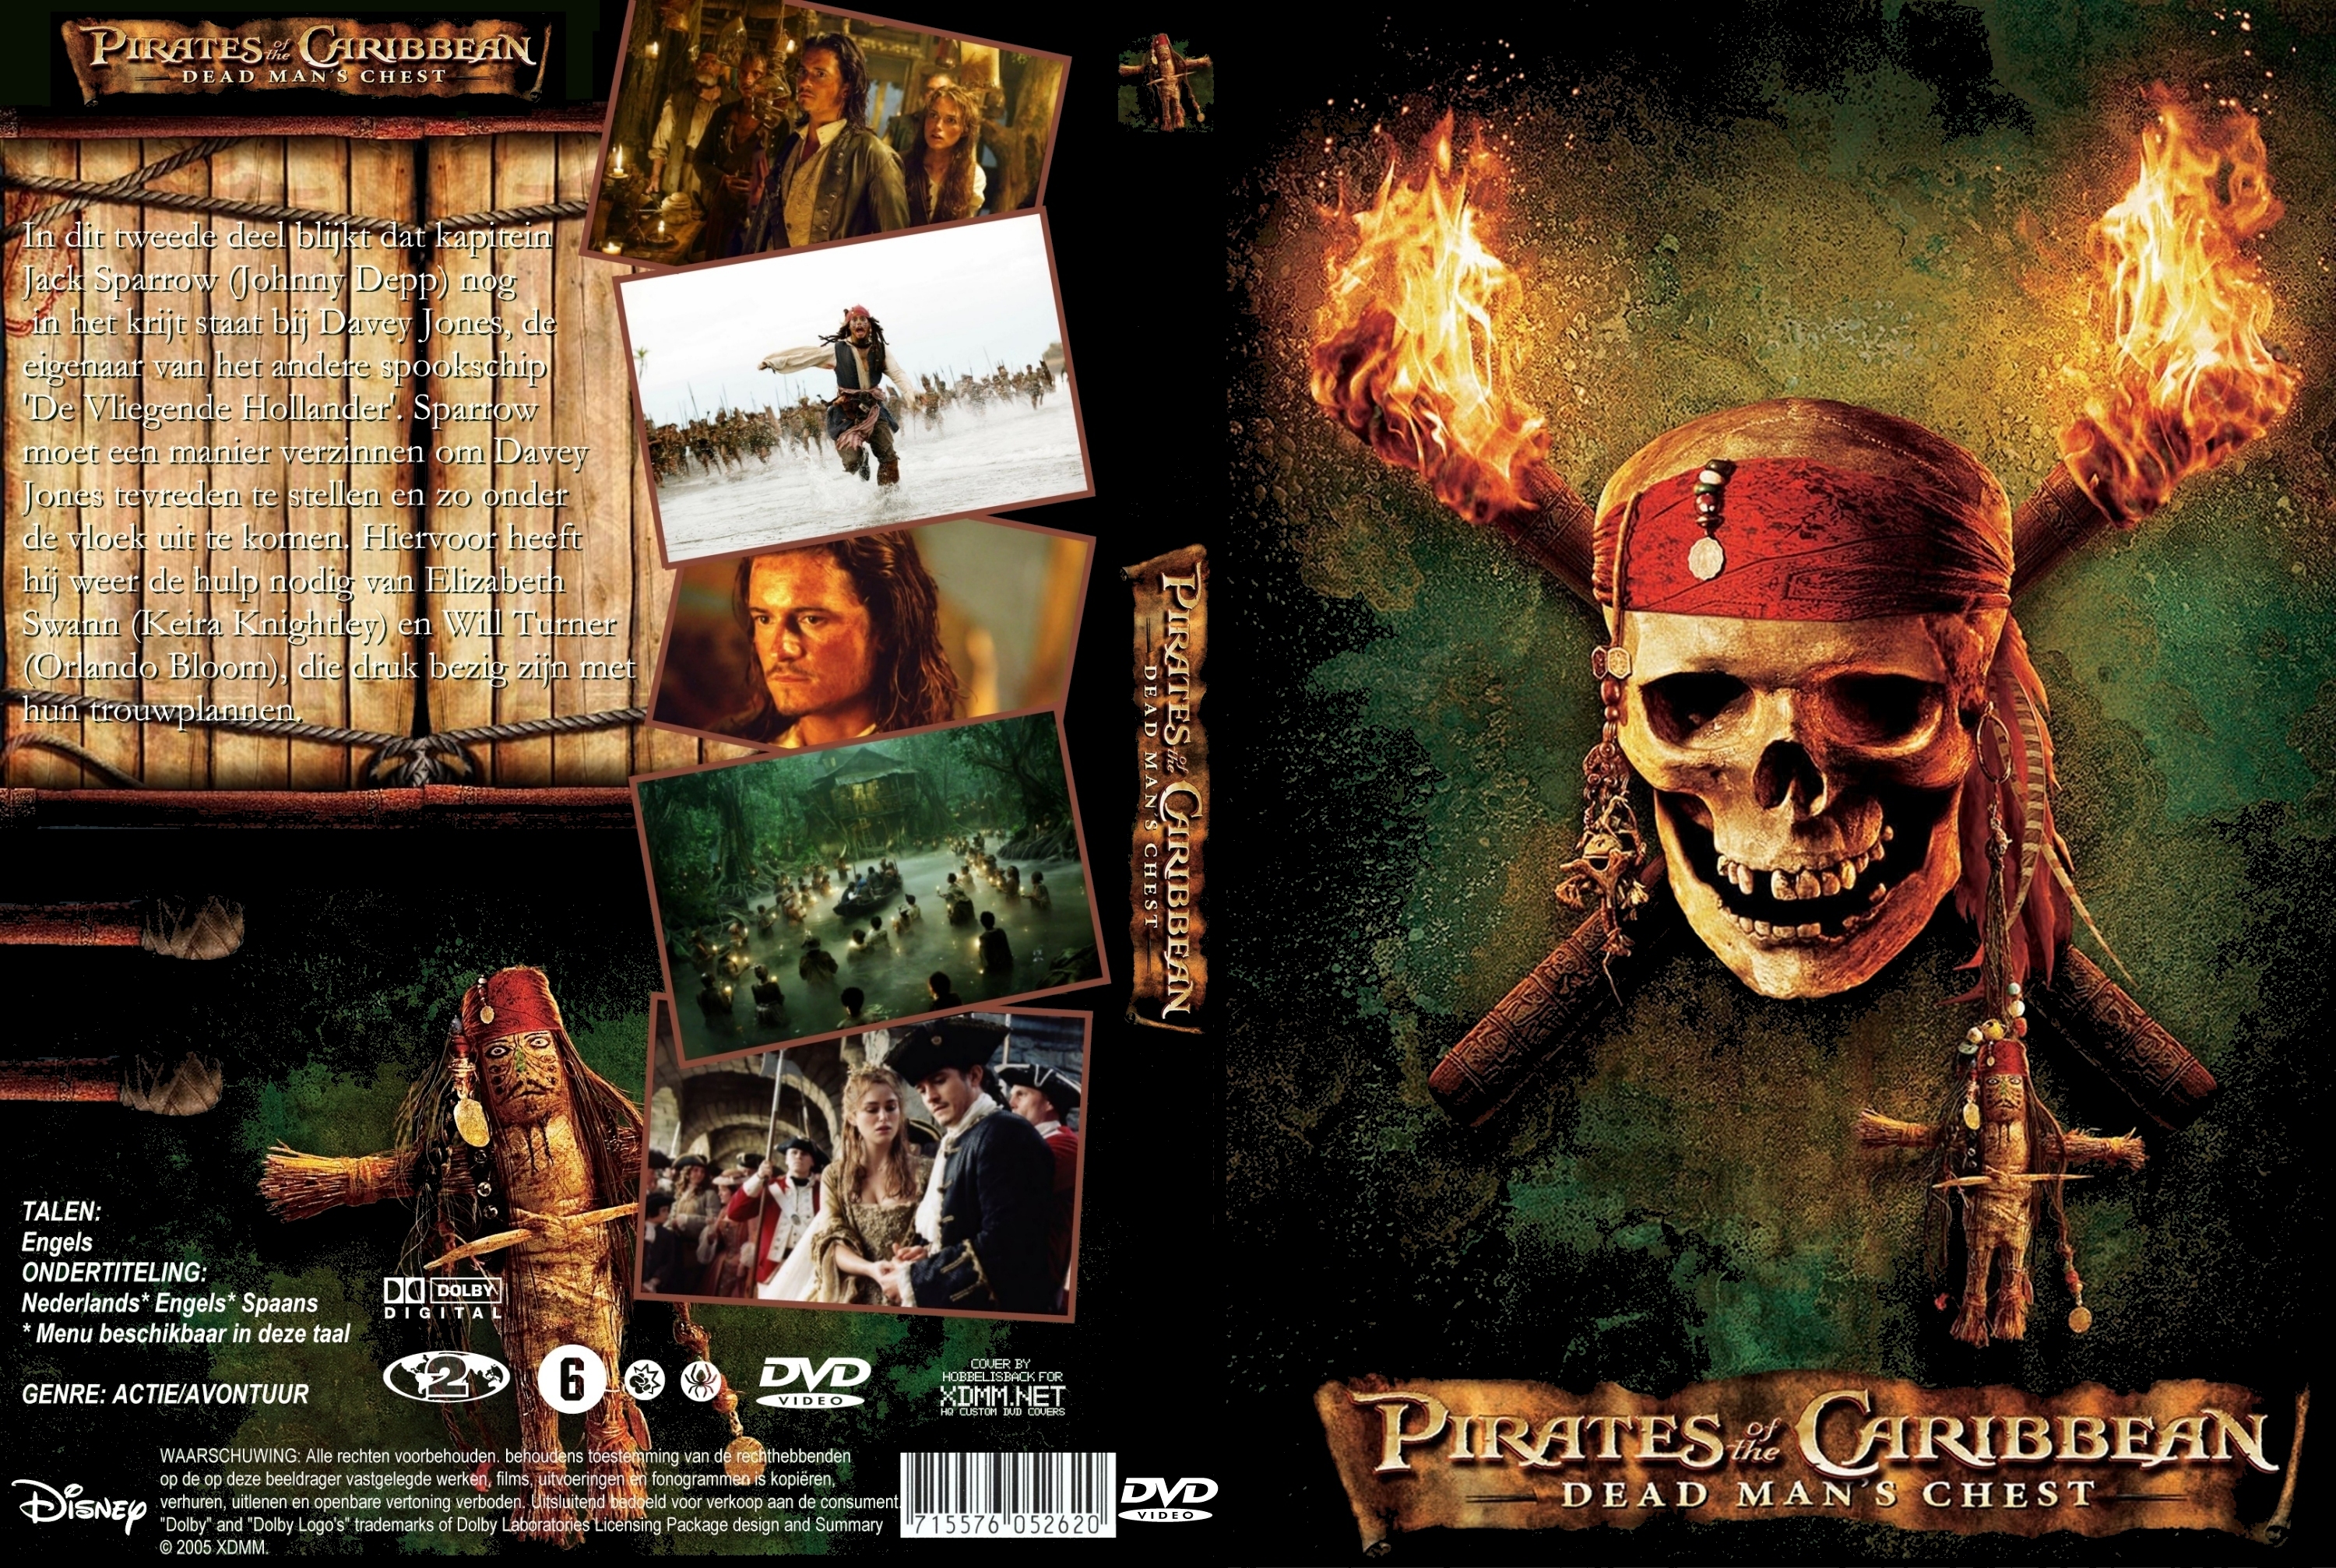 pirates ot the caribean dead man's chest